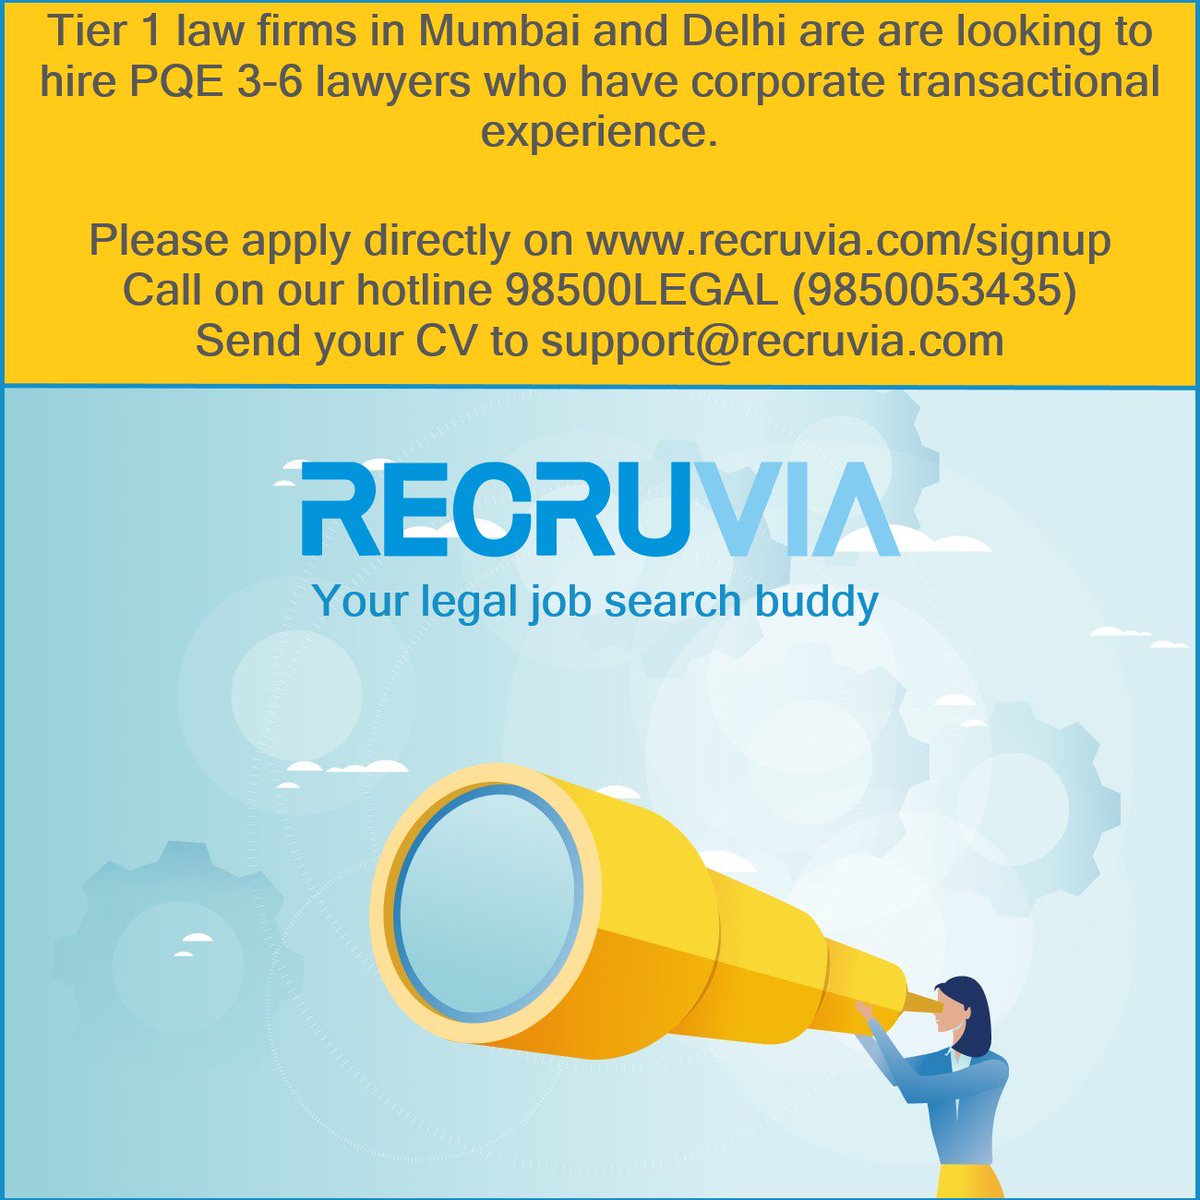 #Hotline: 98500LEGAL (9850053425)
#Email: support@recruvia.com
#Apply: recruvia.com/signup

#legaljobs #jobsearch #jobs #mumbai #lawfirms #recruitment #recruiting #hiring #opening #legalopenings #lawyer #lawyeropenings #openingsforlawyers #jobsforlawyers #hiringlawyers #delhi